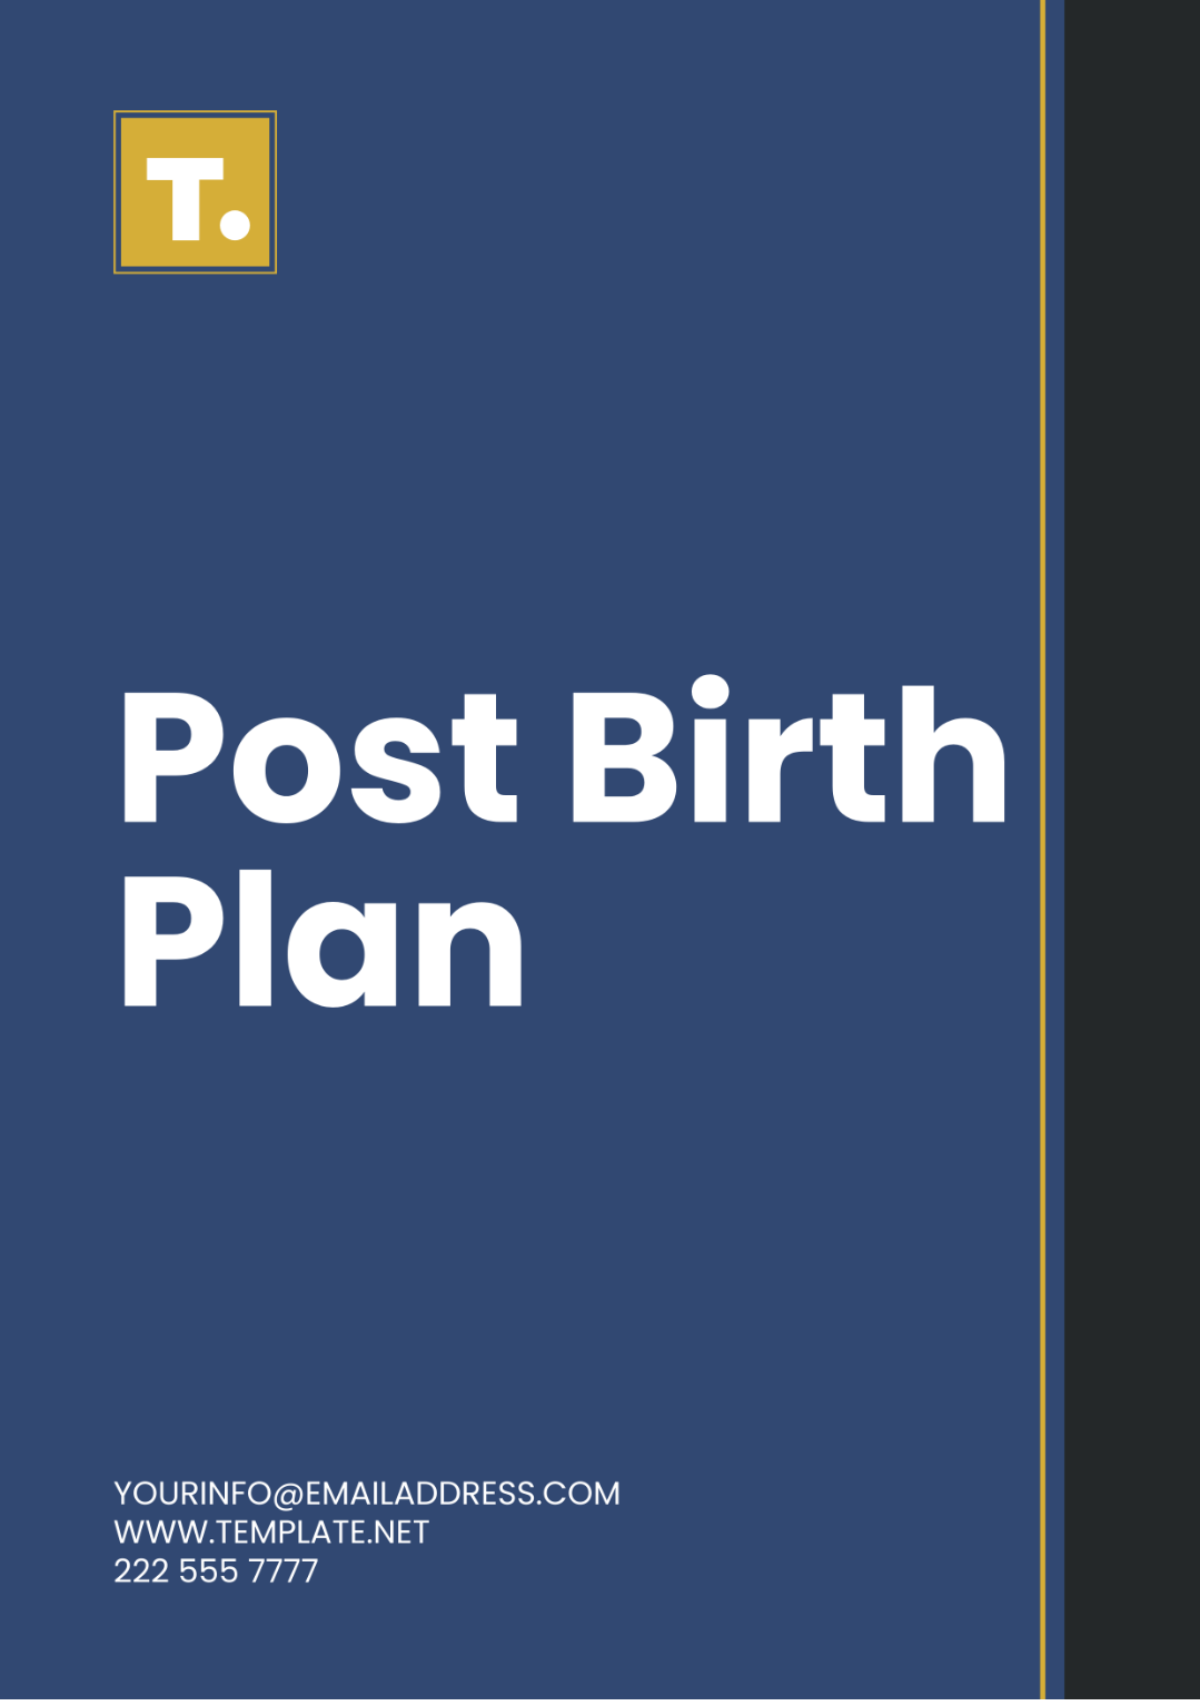 Post Birth Plan Template